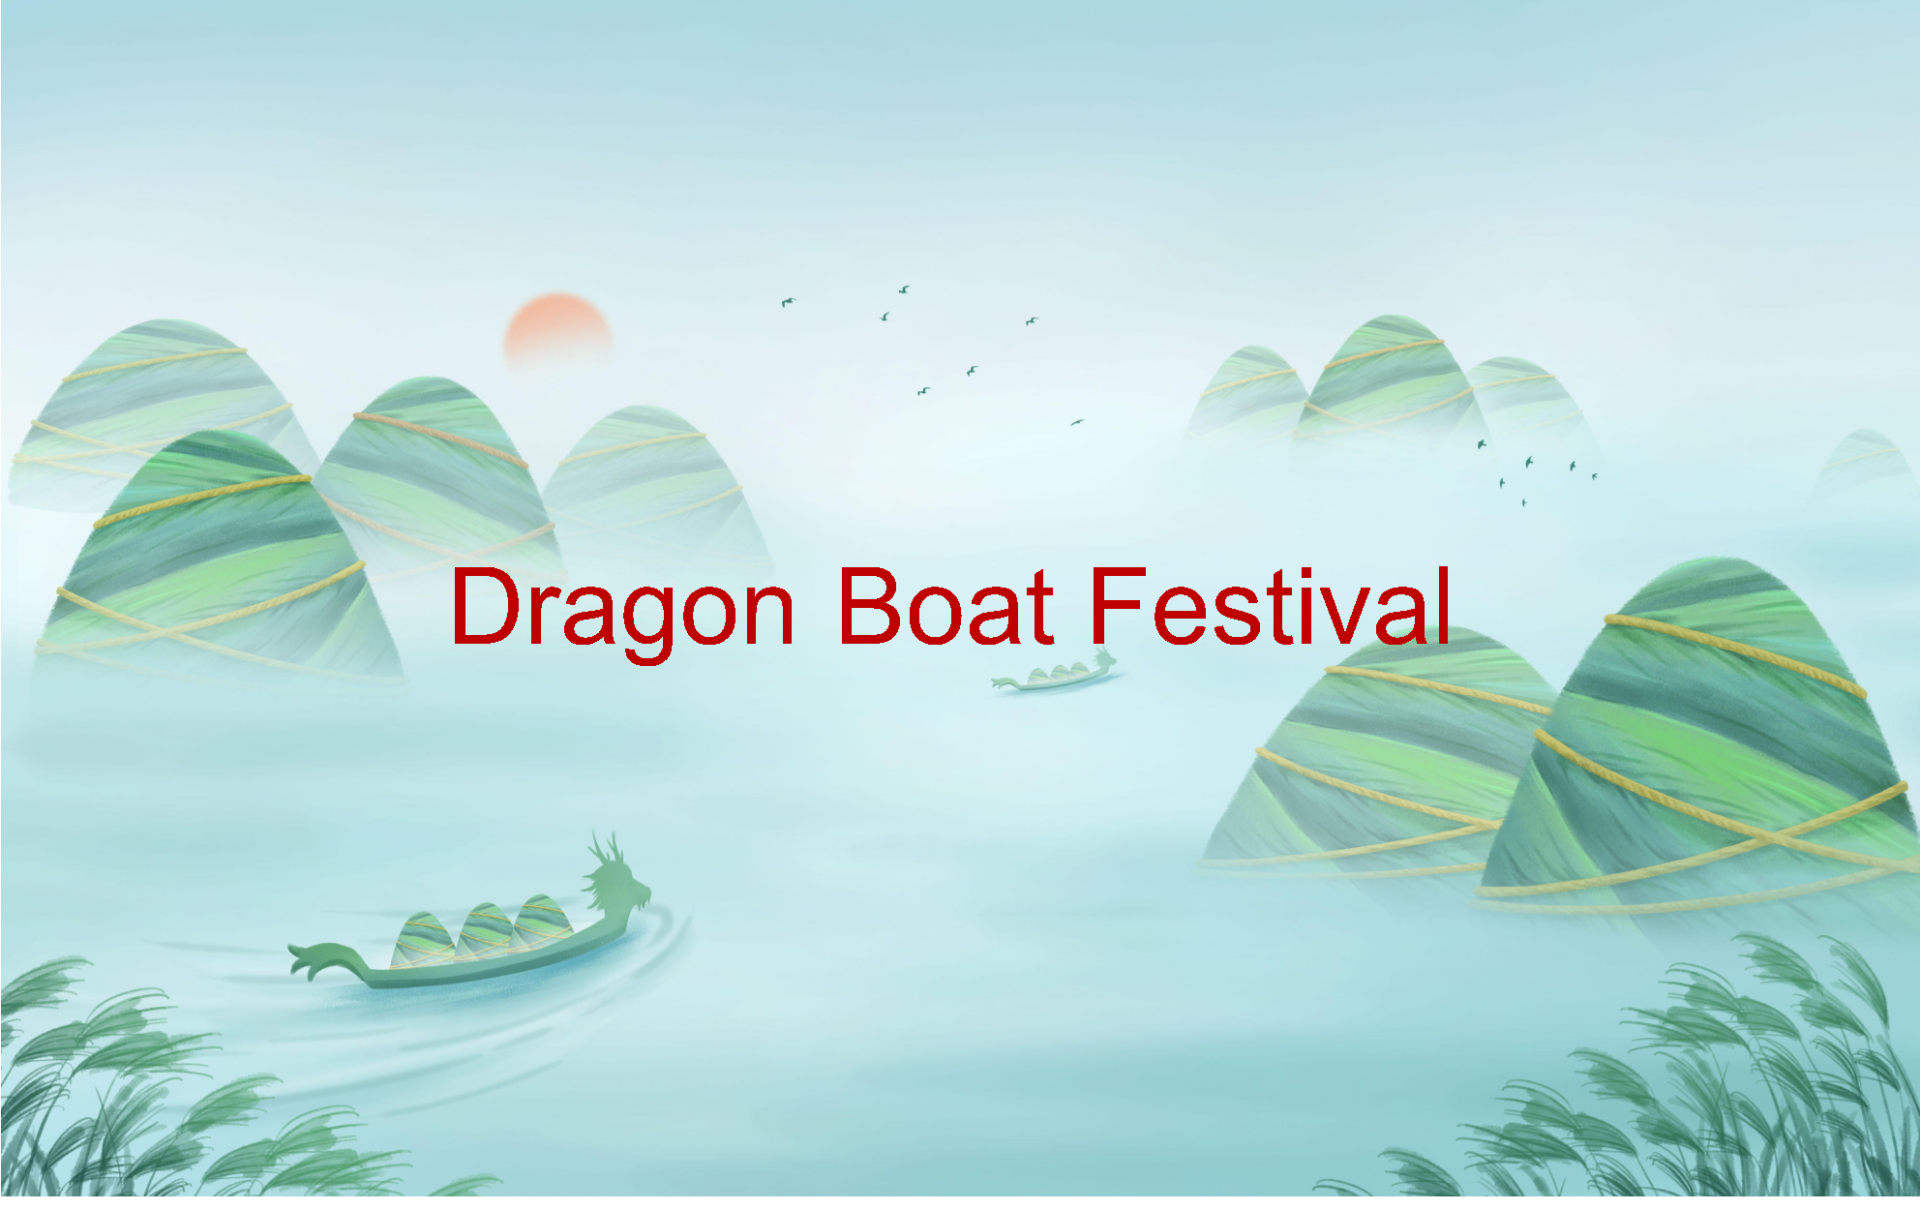 Jodith wish you a Happy Dragon Boat Festival 